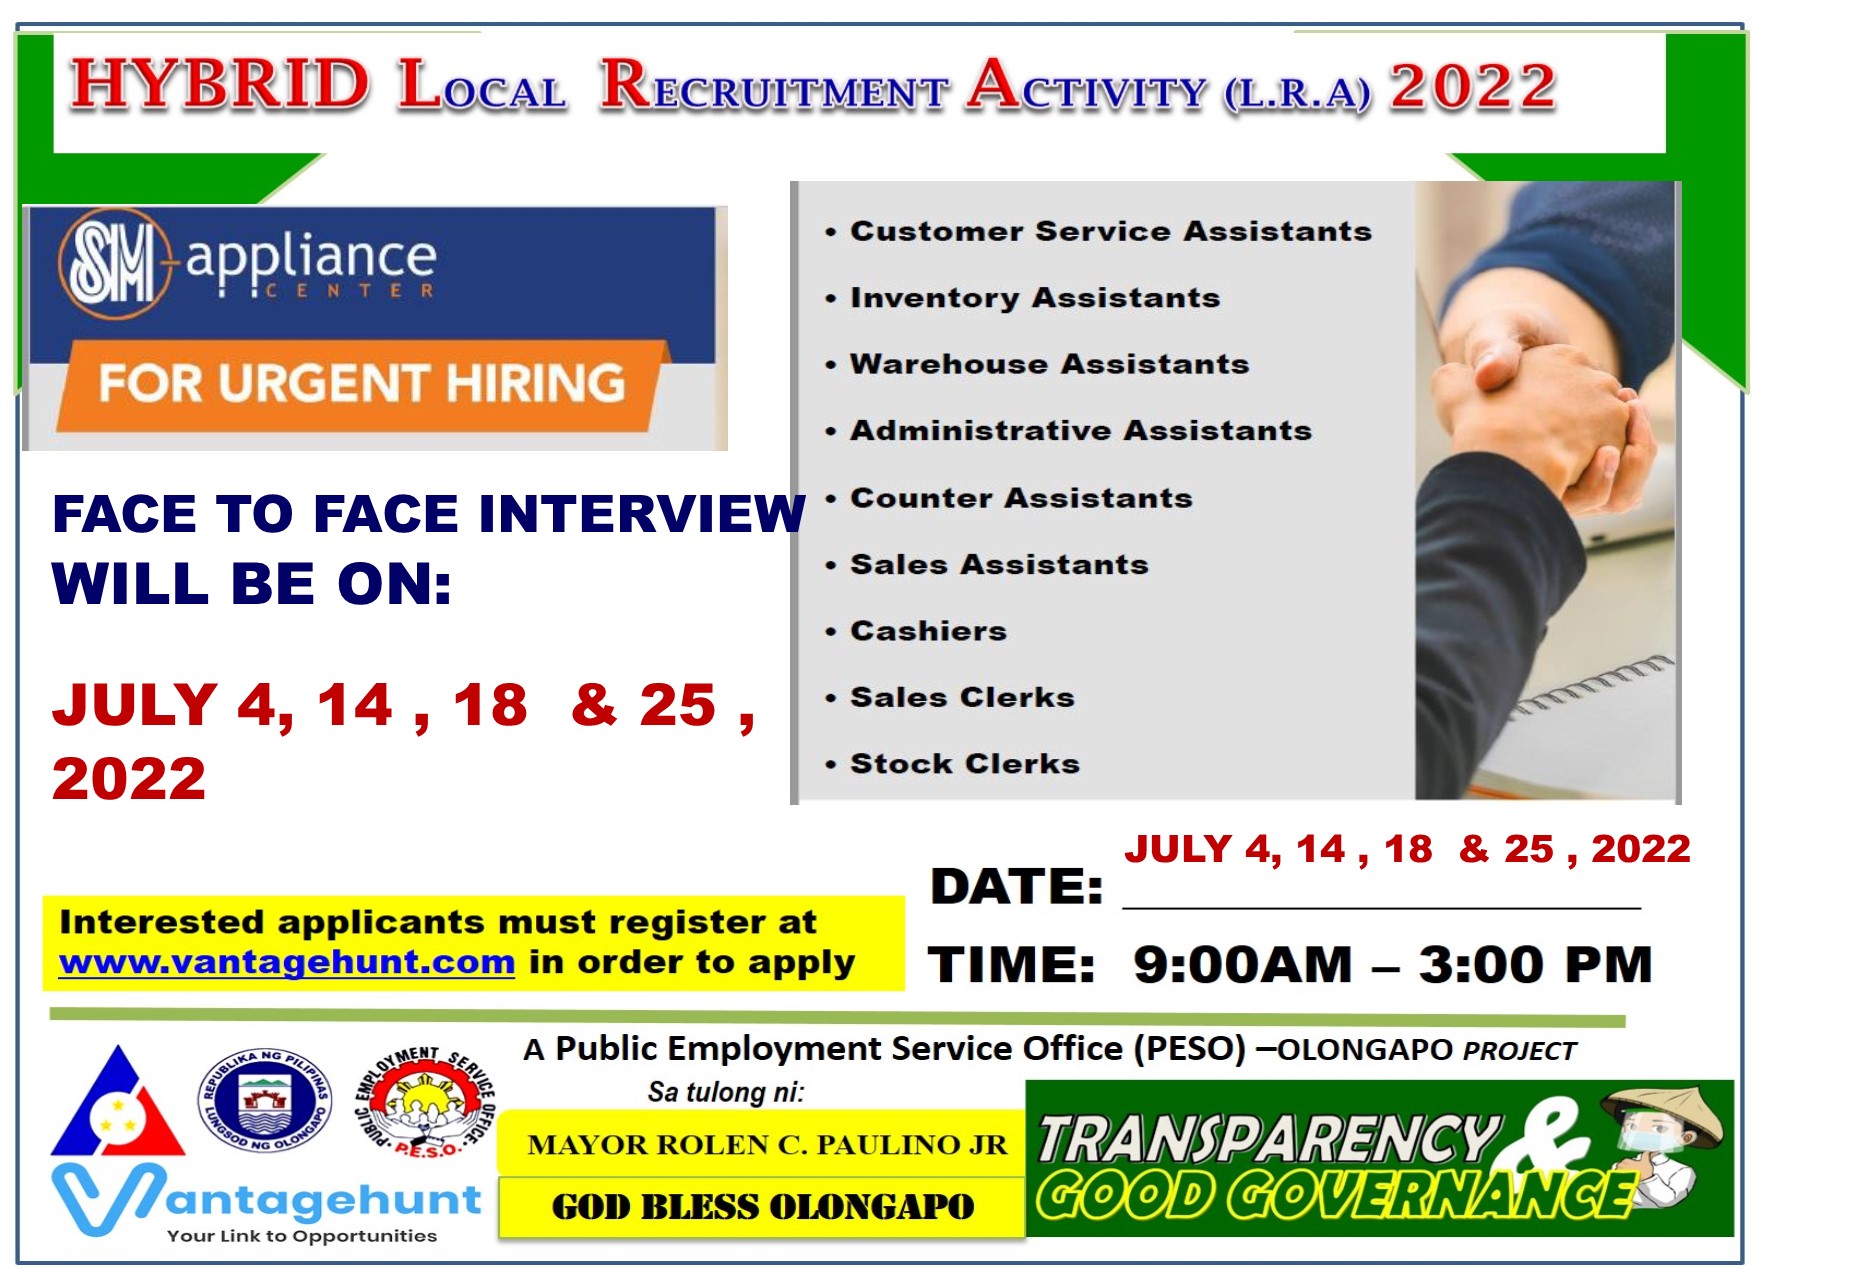 SM APPLIANCE Exclusive Local Recruitment Acitivity Banner Vantagehunt